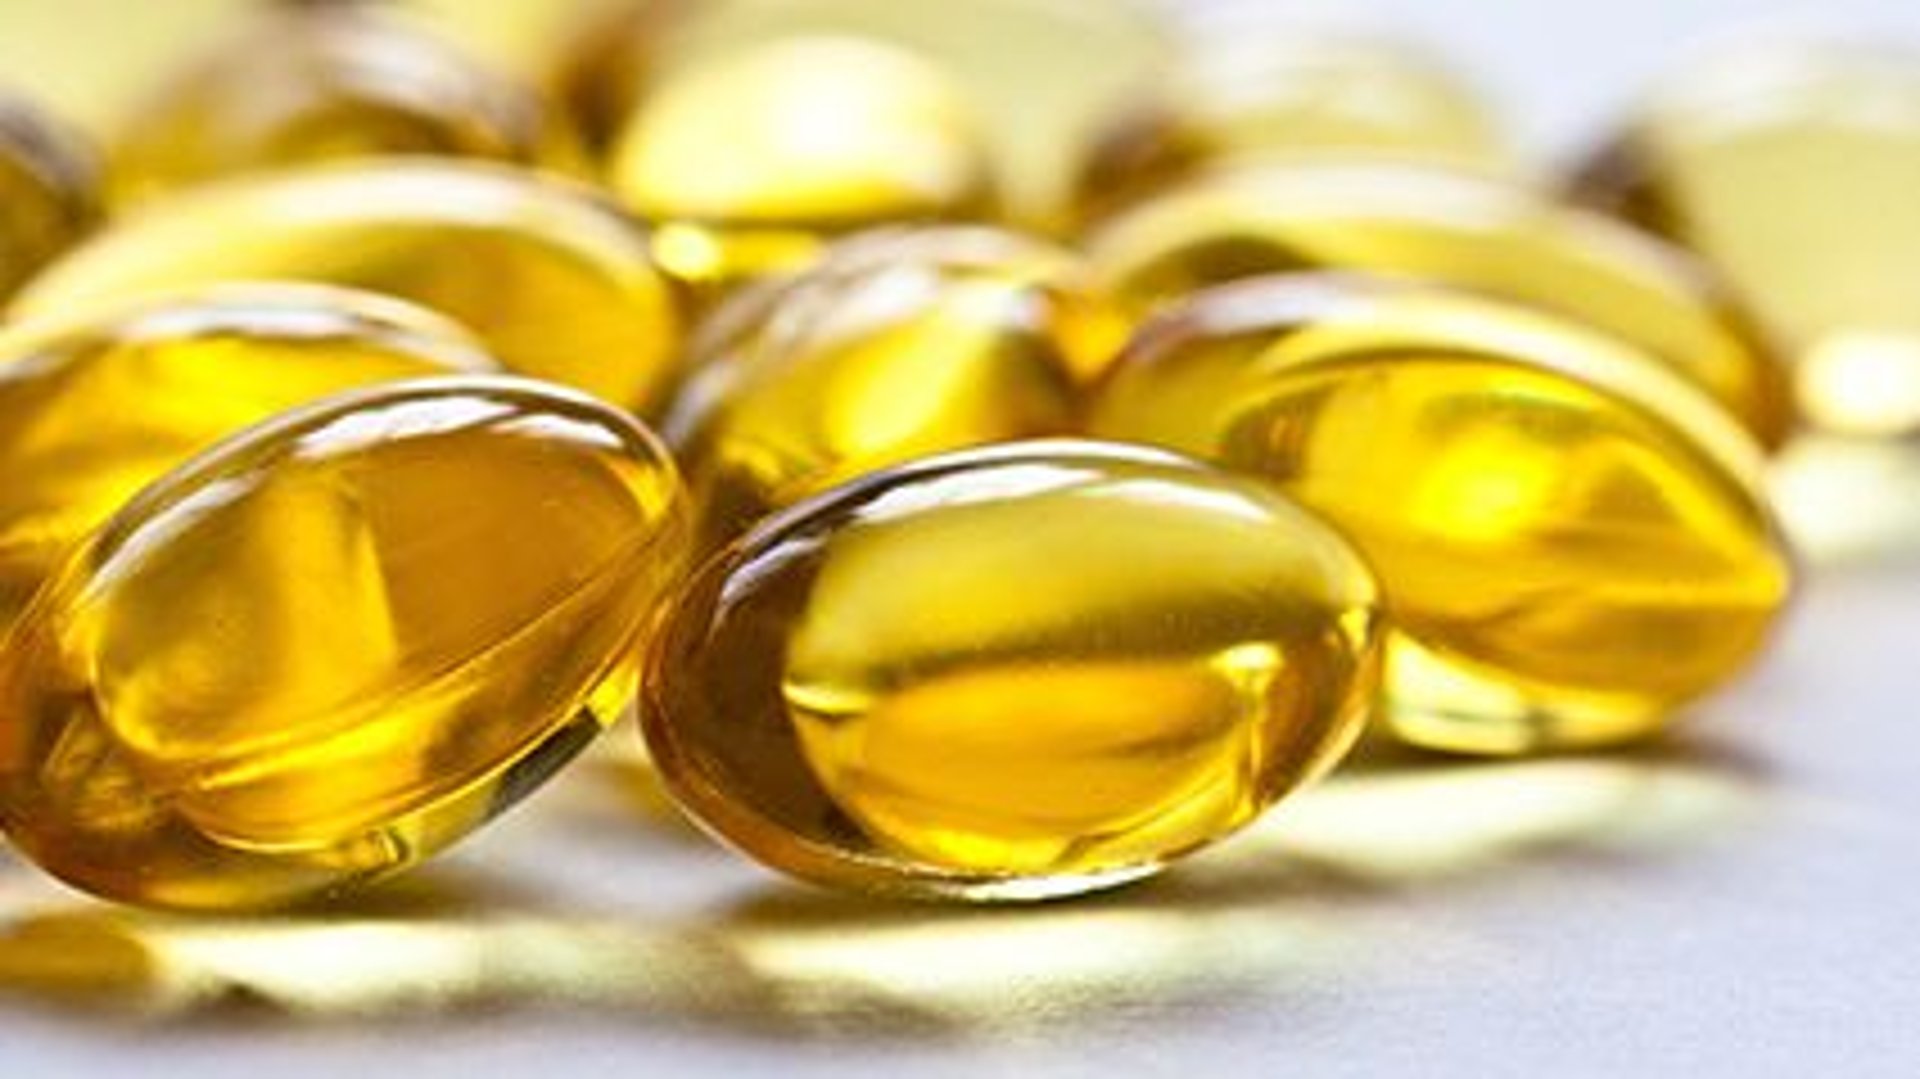 Vitamin D Supplements Won't Help Your Bones, Large Study Finds thumbnail